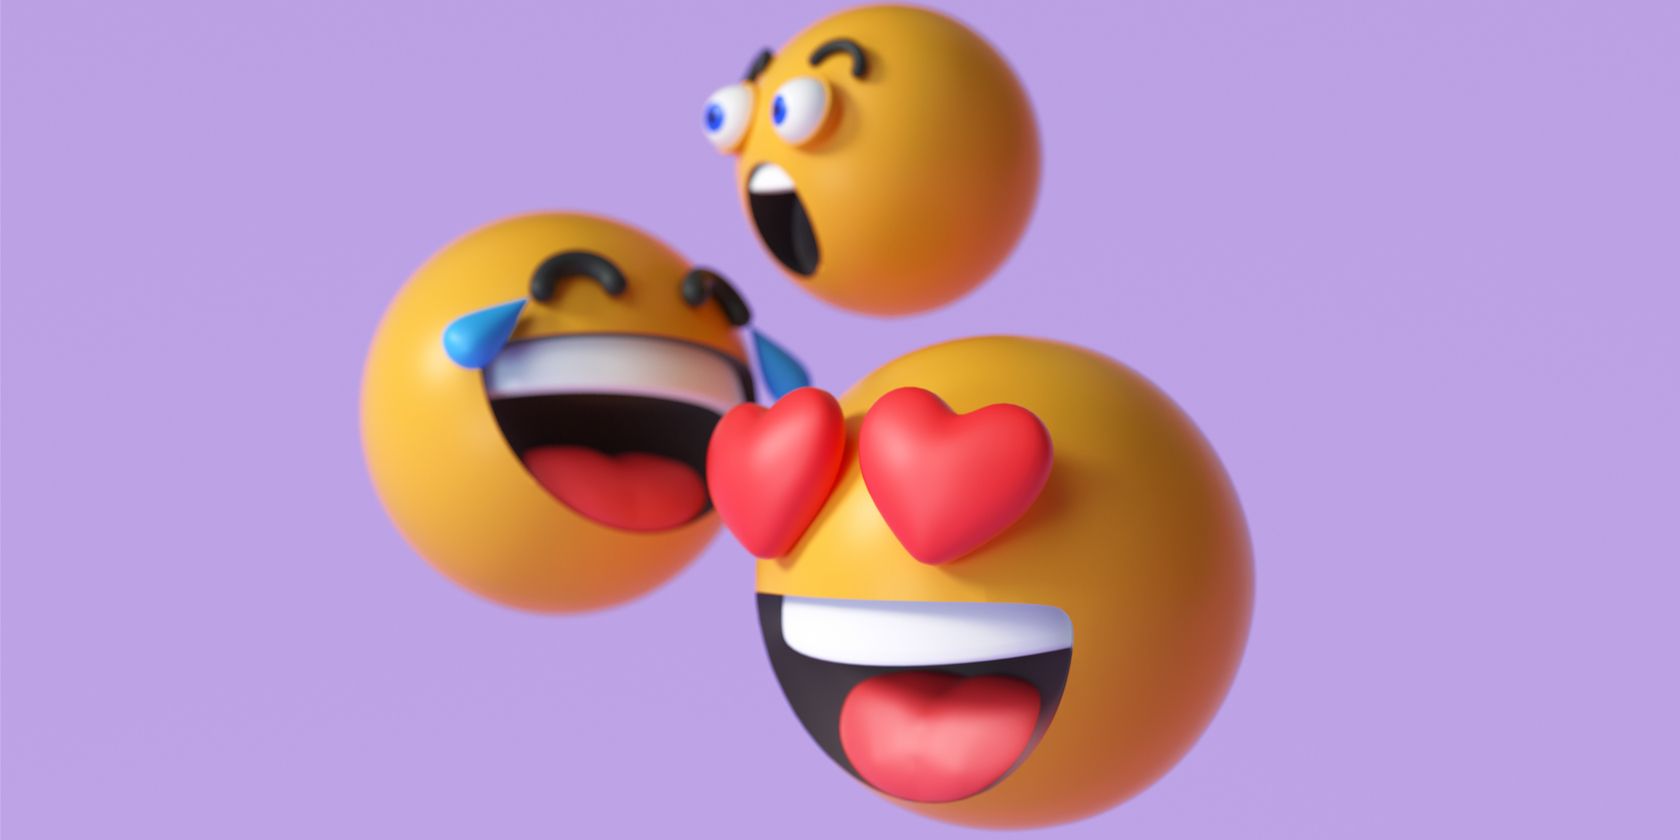 Microsoft Just Made Its Emoji Open Source